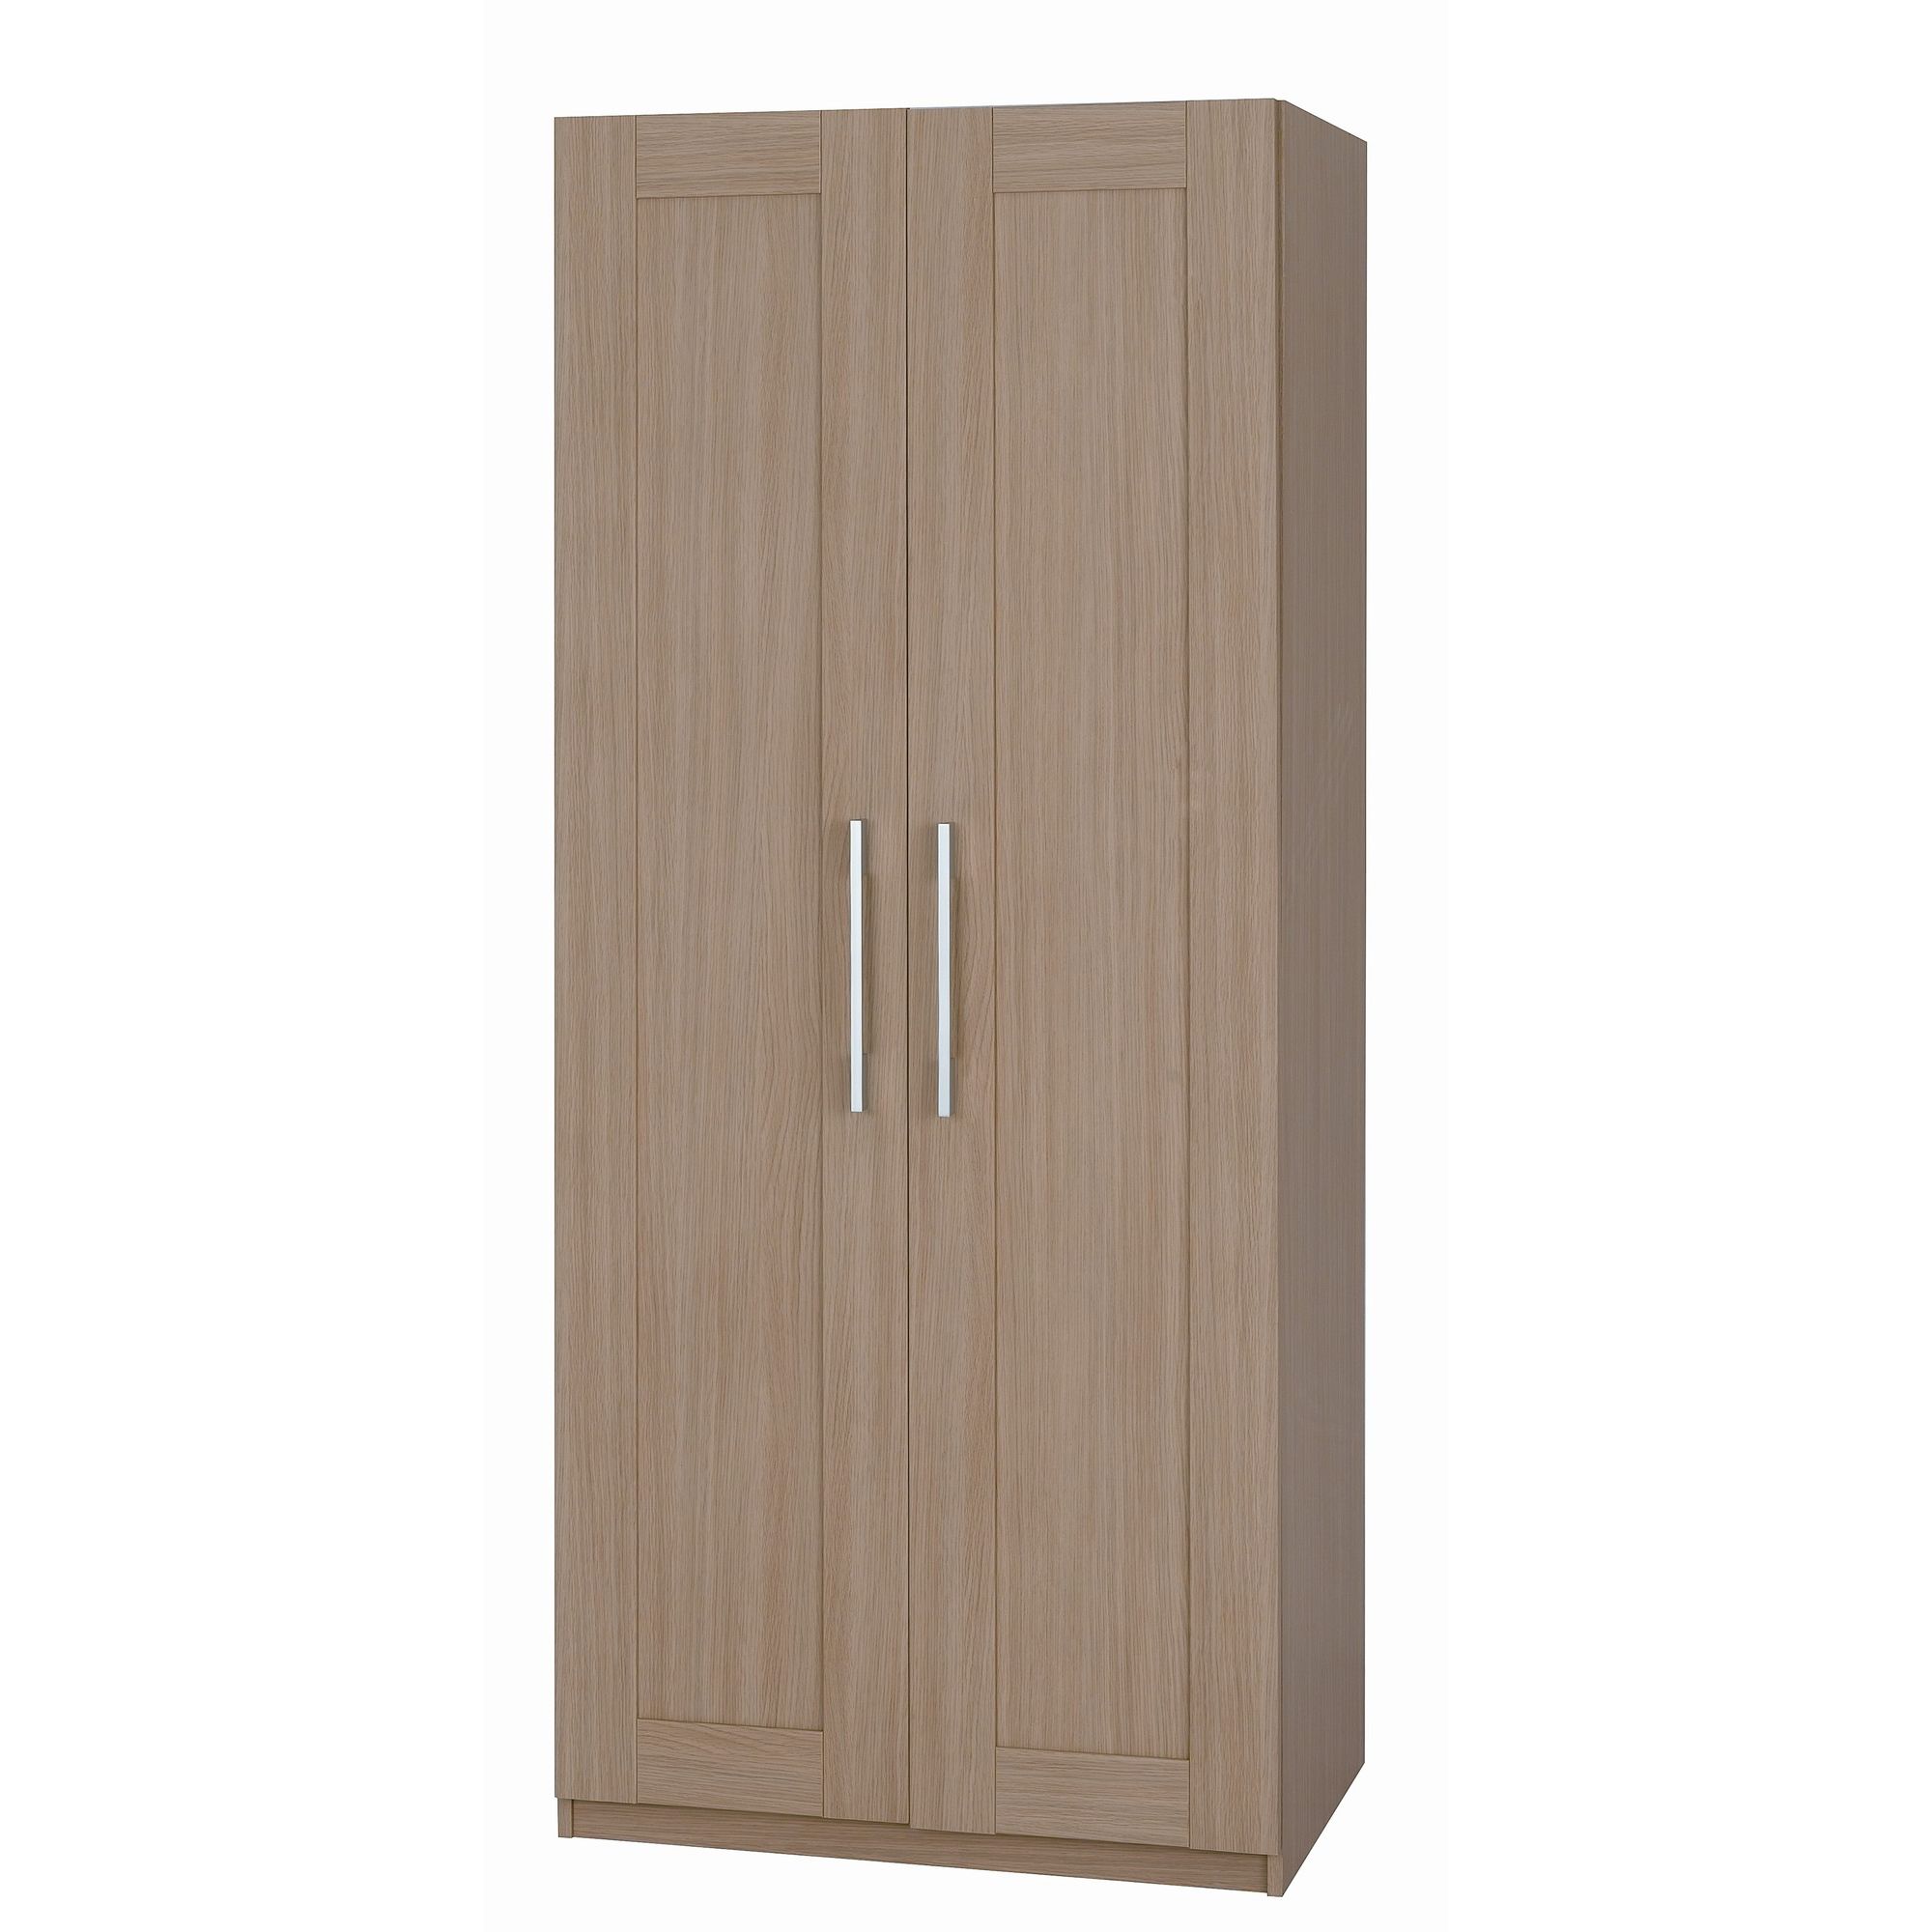 Alto Furniture Visualise Shaker Two Door Wardrobe in Veradi Oak at Tesco Direct